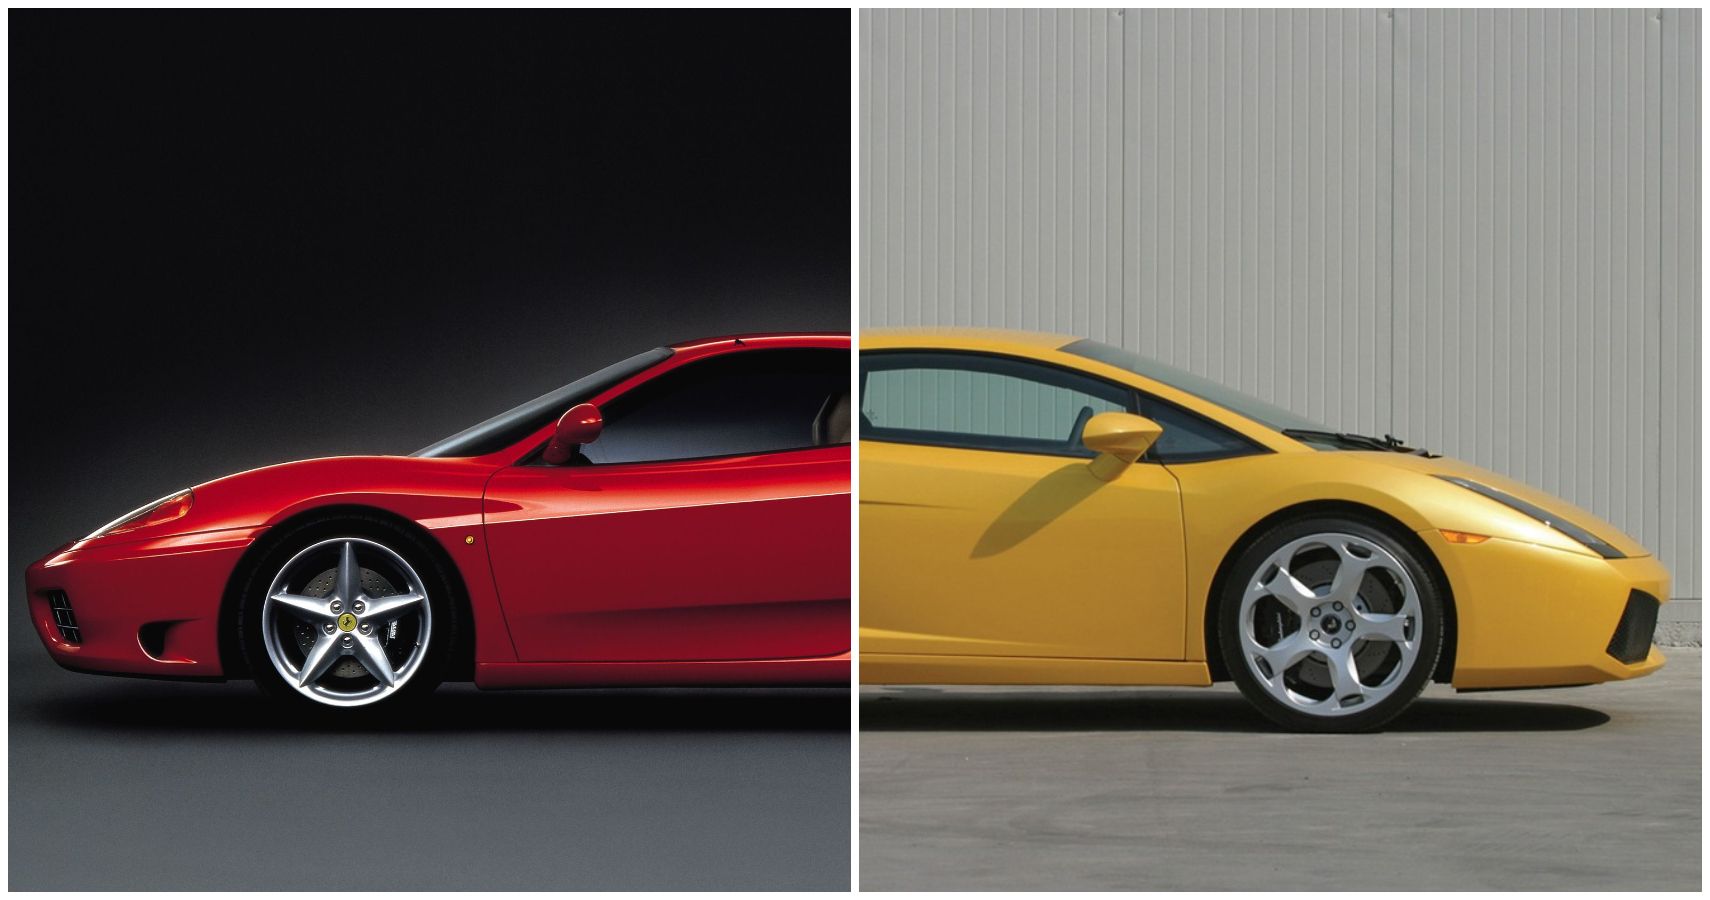 A Collage Of A 2002 Ferrari 360 Modena And A 2003 Lamborghini Gallardo 5